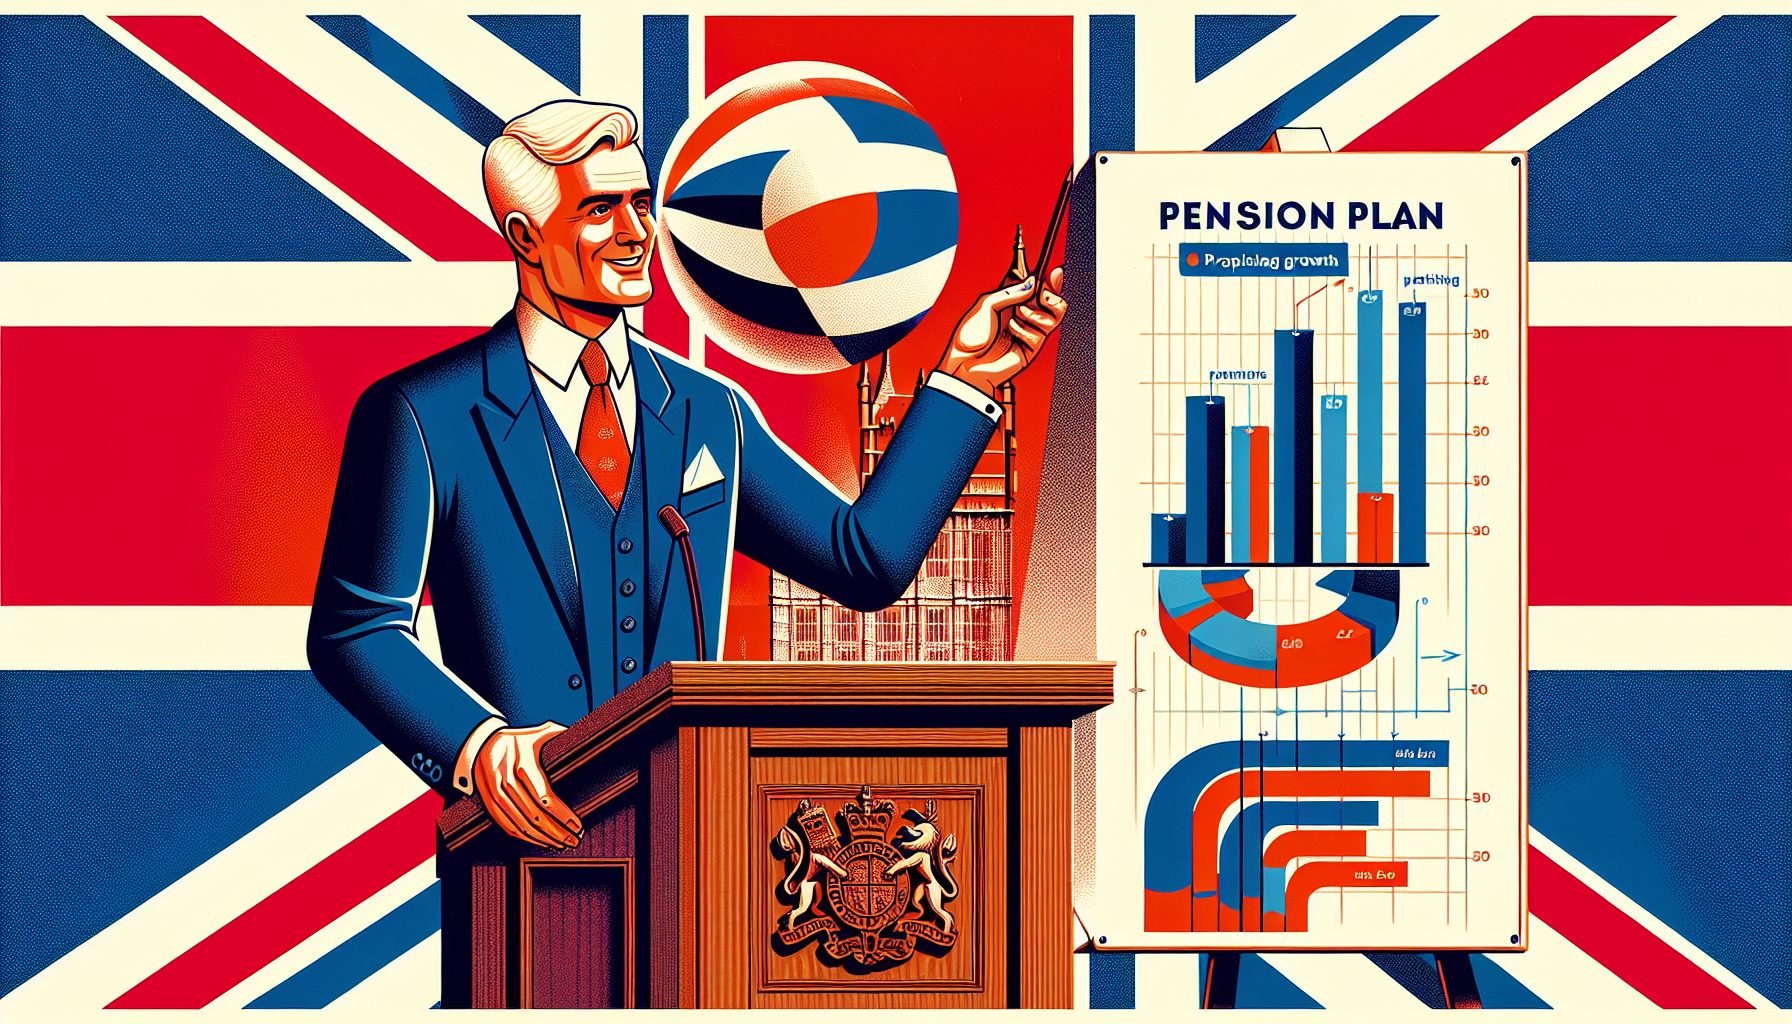 "Chancellor Pension Reforms"